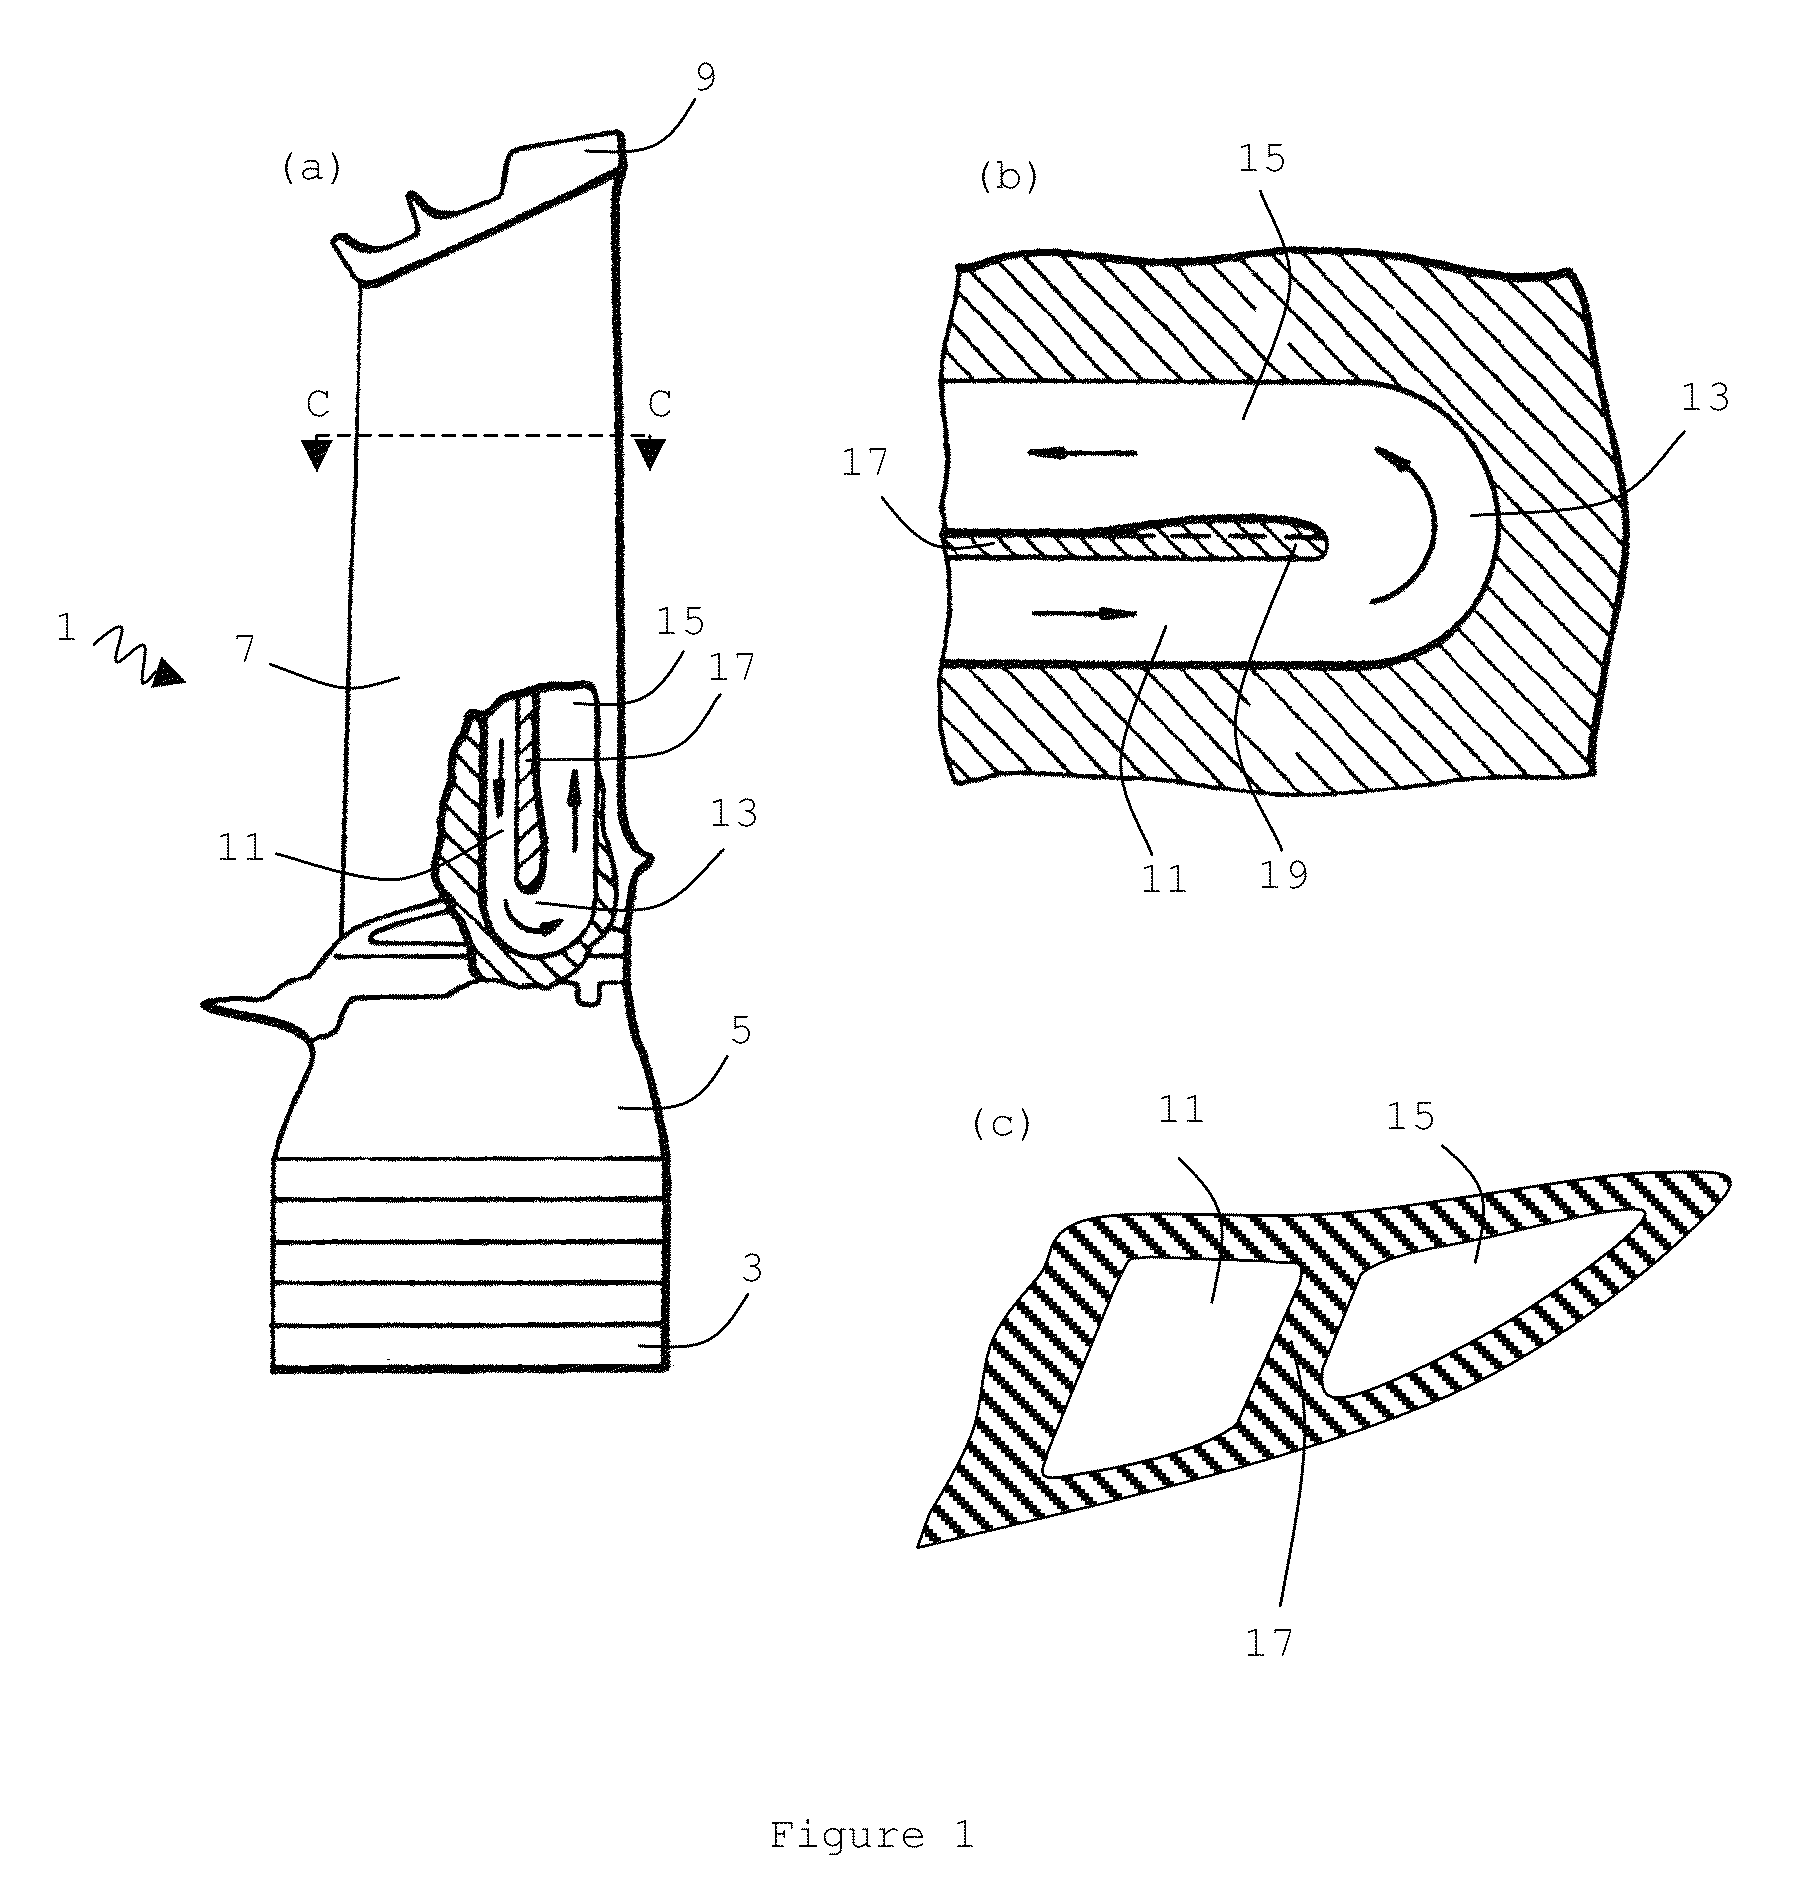 Cooled aerofoil blade or vane